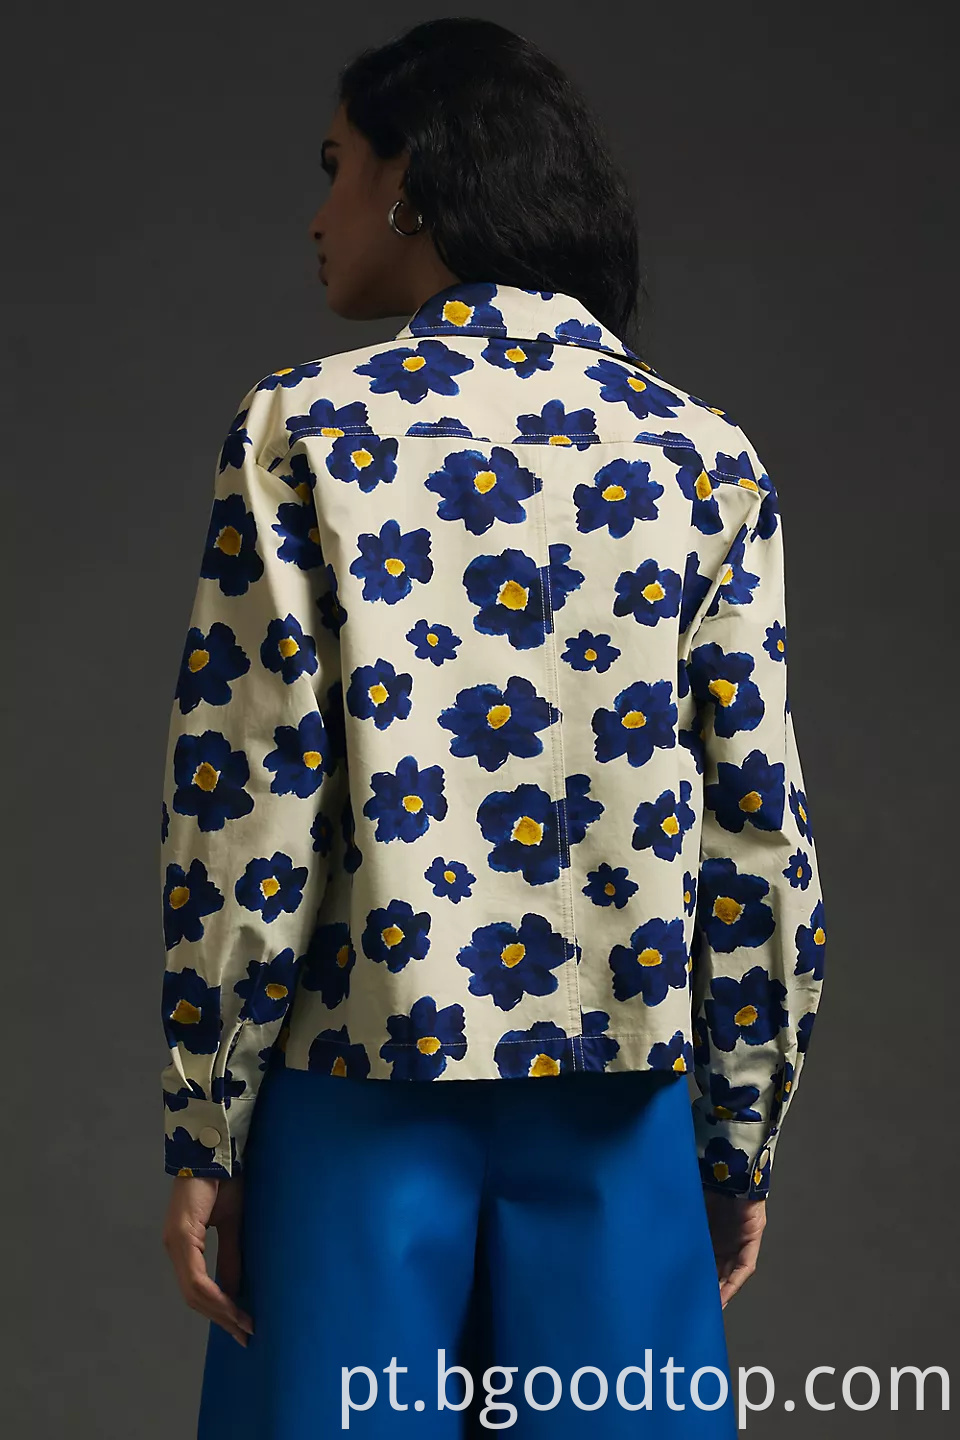 Fashionable and versatile women's floral jacket